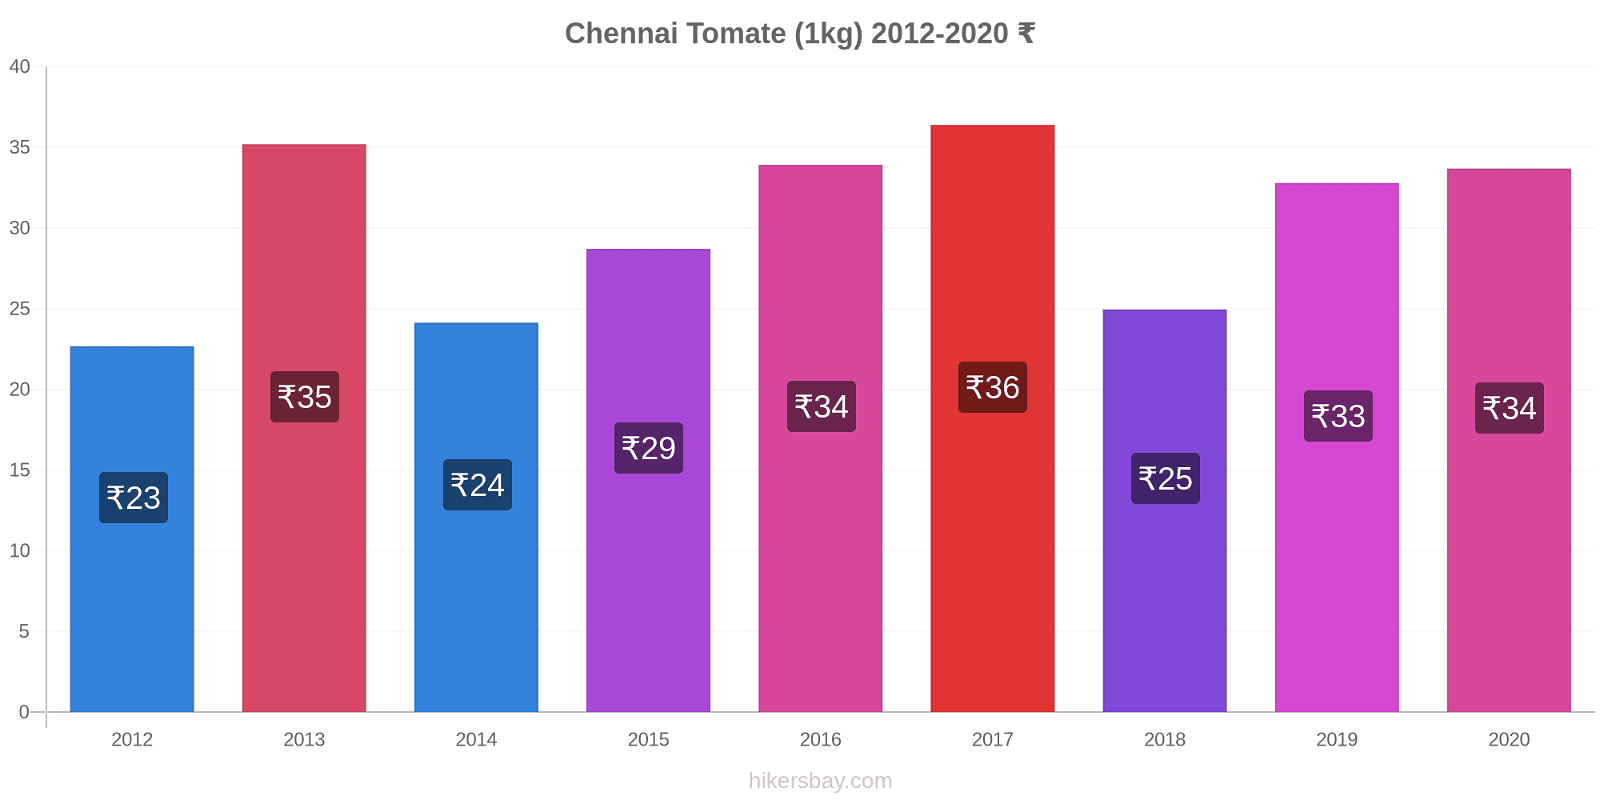 Chennai cambios de precios Tomate (1kg) hikersbay.com